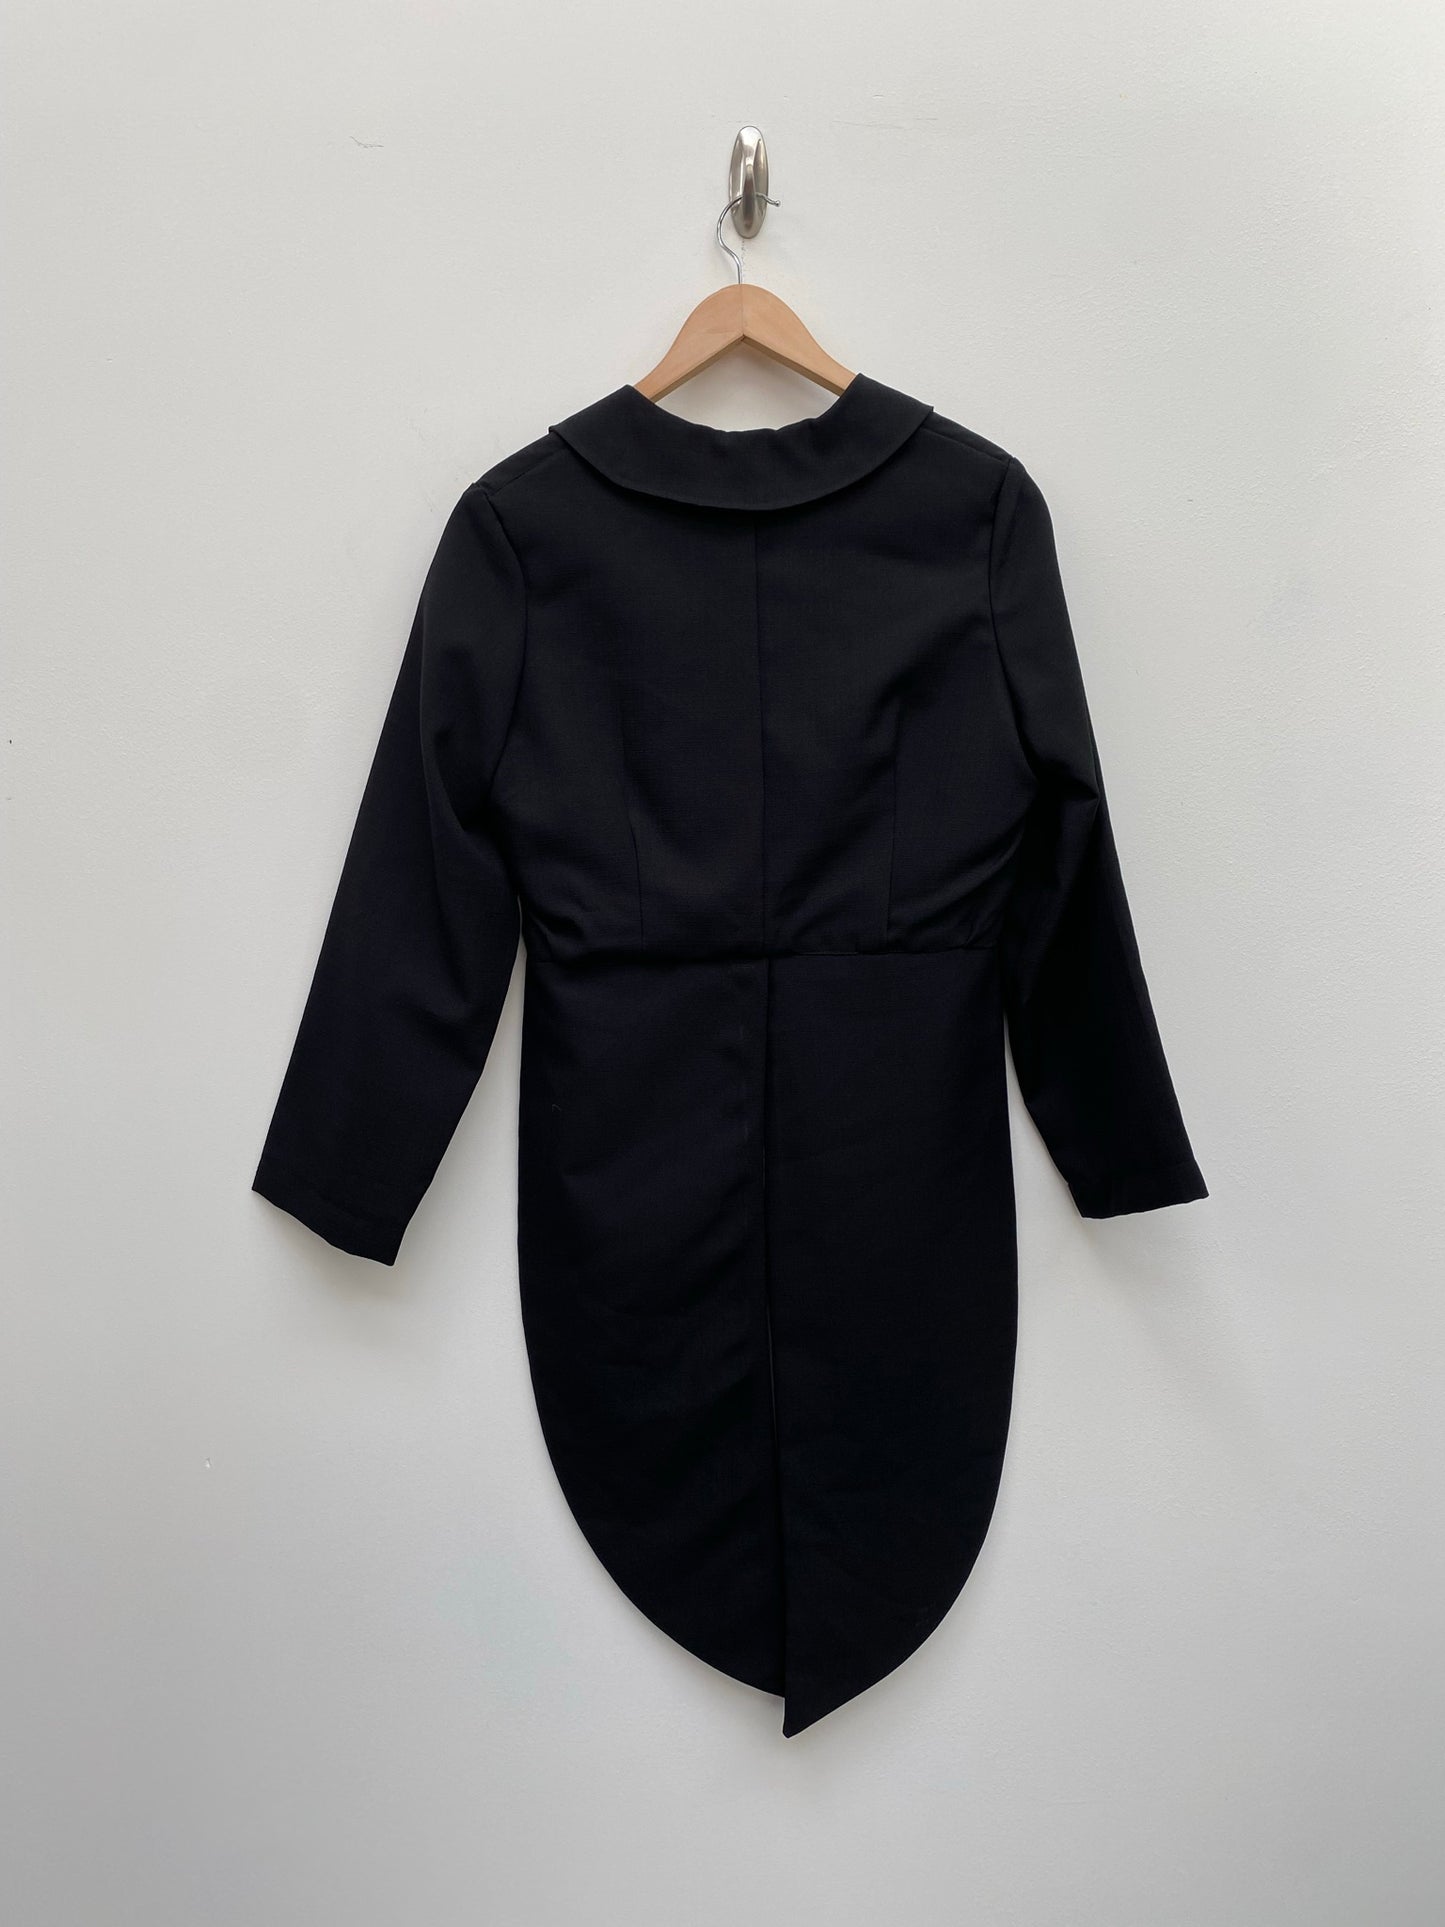 Ringmaster Black Tailcoat Medium - Ex Hire Fancy Dress Costume